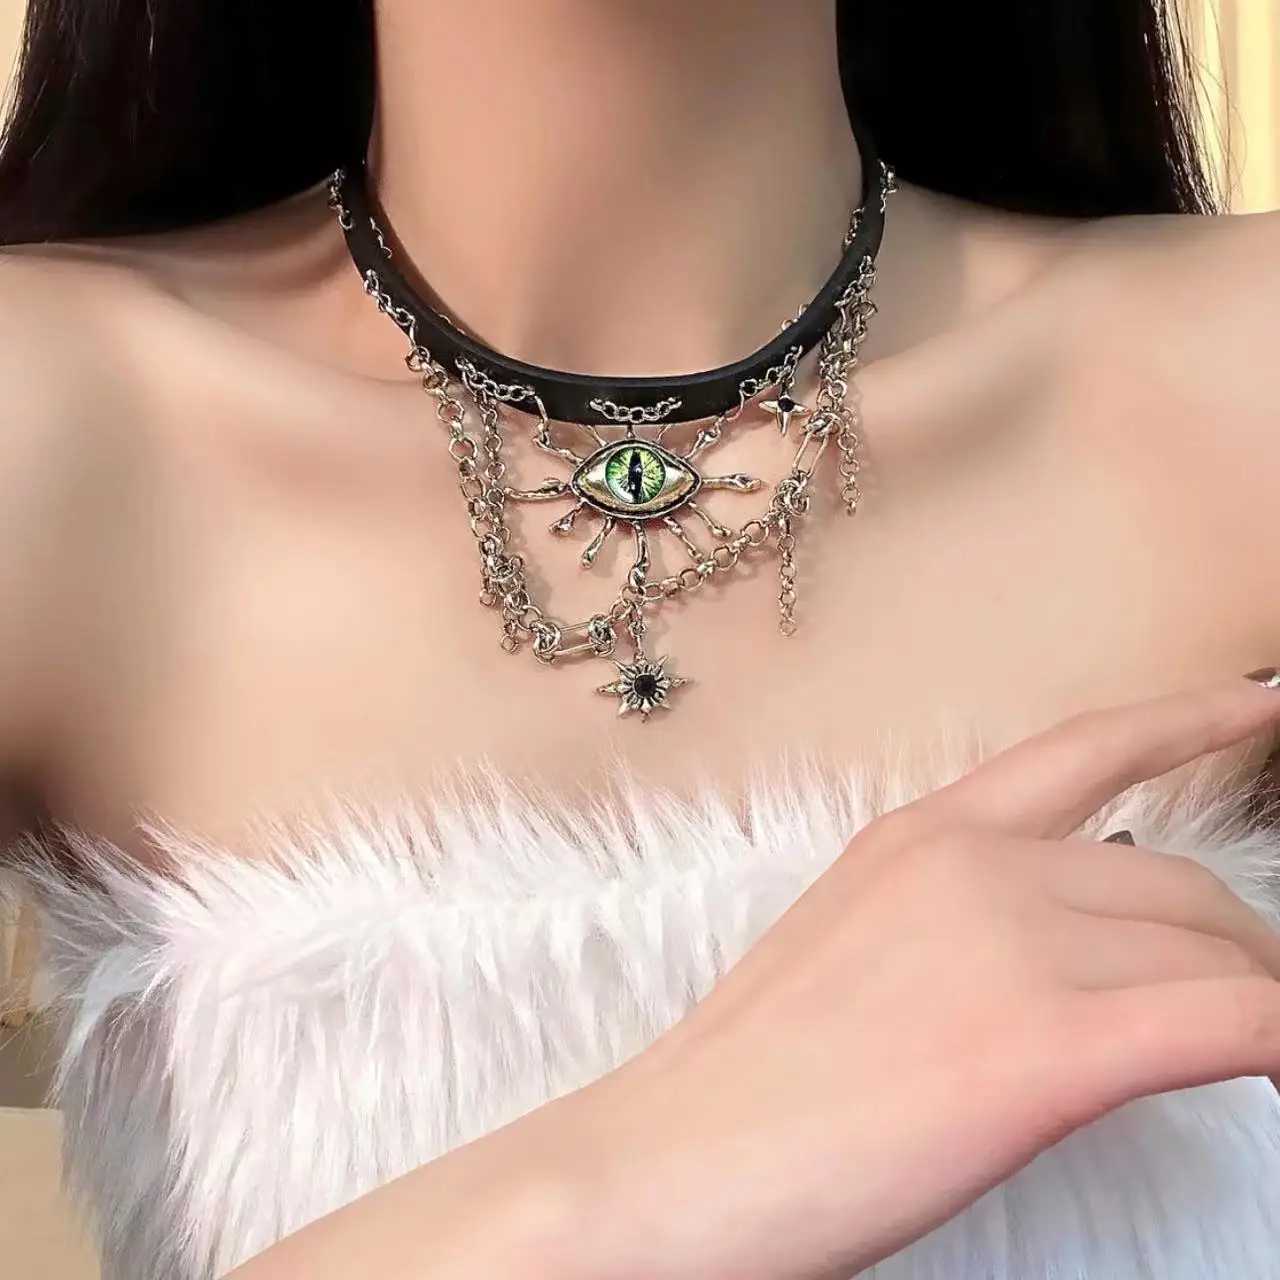 

Fashion Turkish Evil Eyes Necklaces Women Bohemian Crystal Devil Eye Charm Pendant Necklace Choker Party Jewelry Decorative Prop